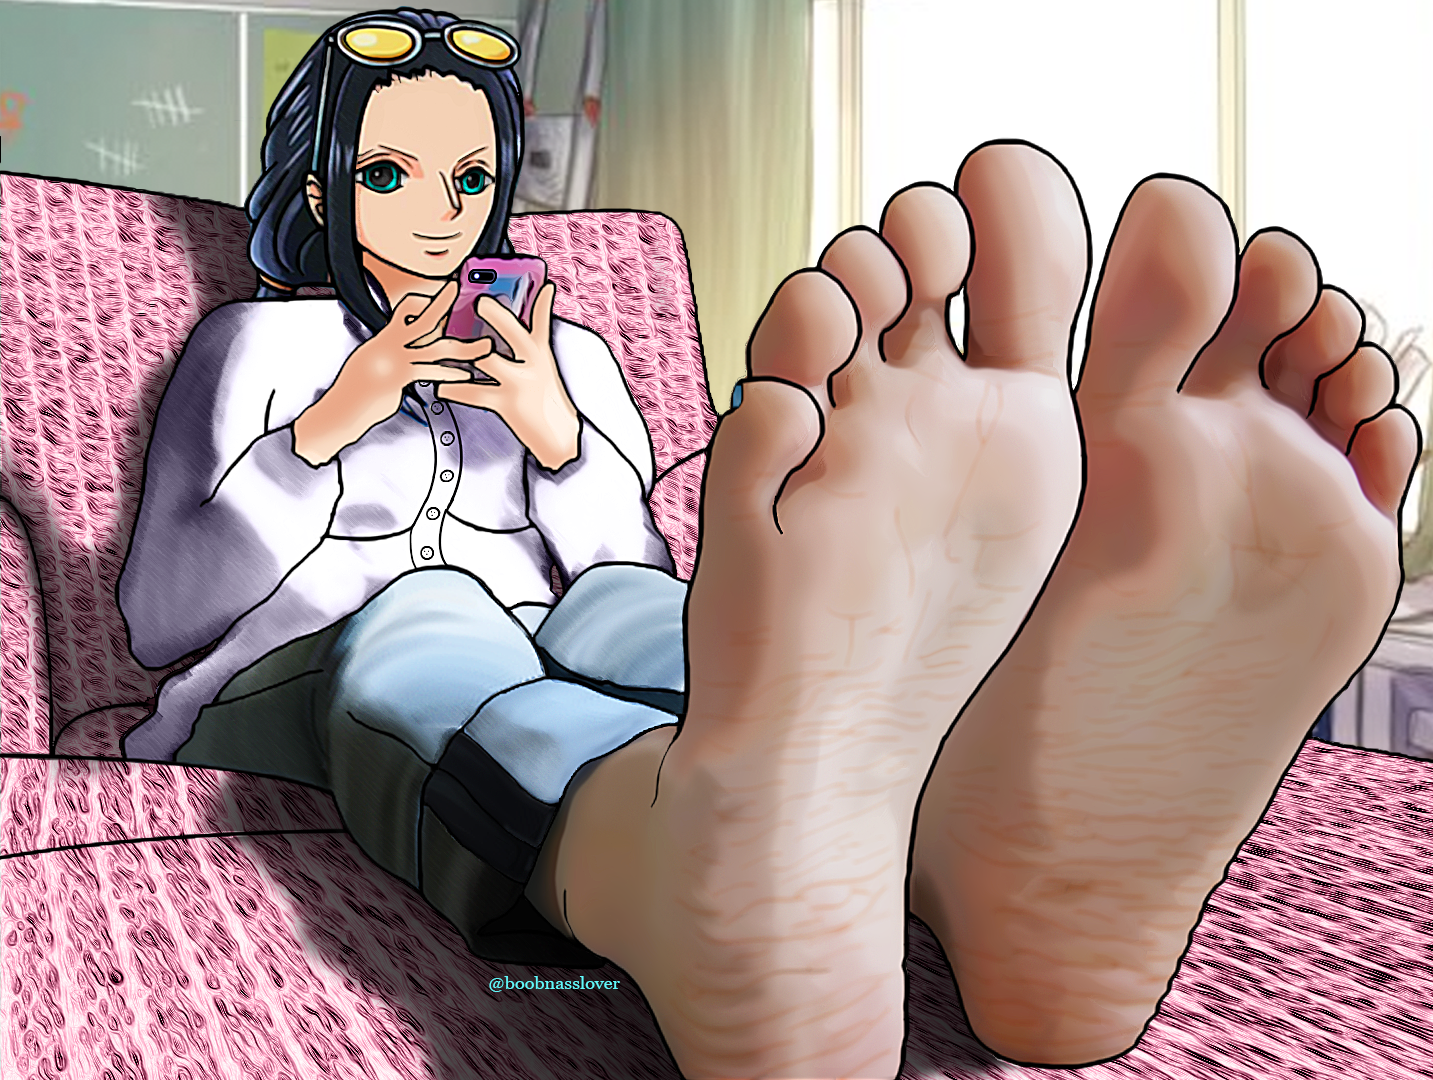 Robin-chwan Wants Her Feet Worshipped.